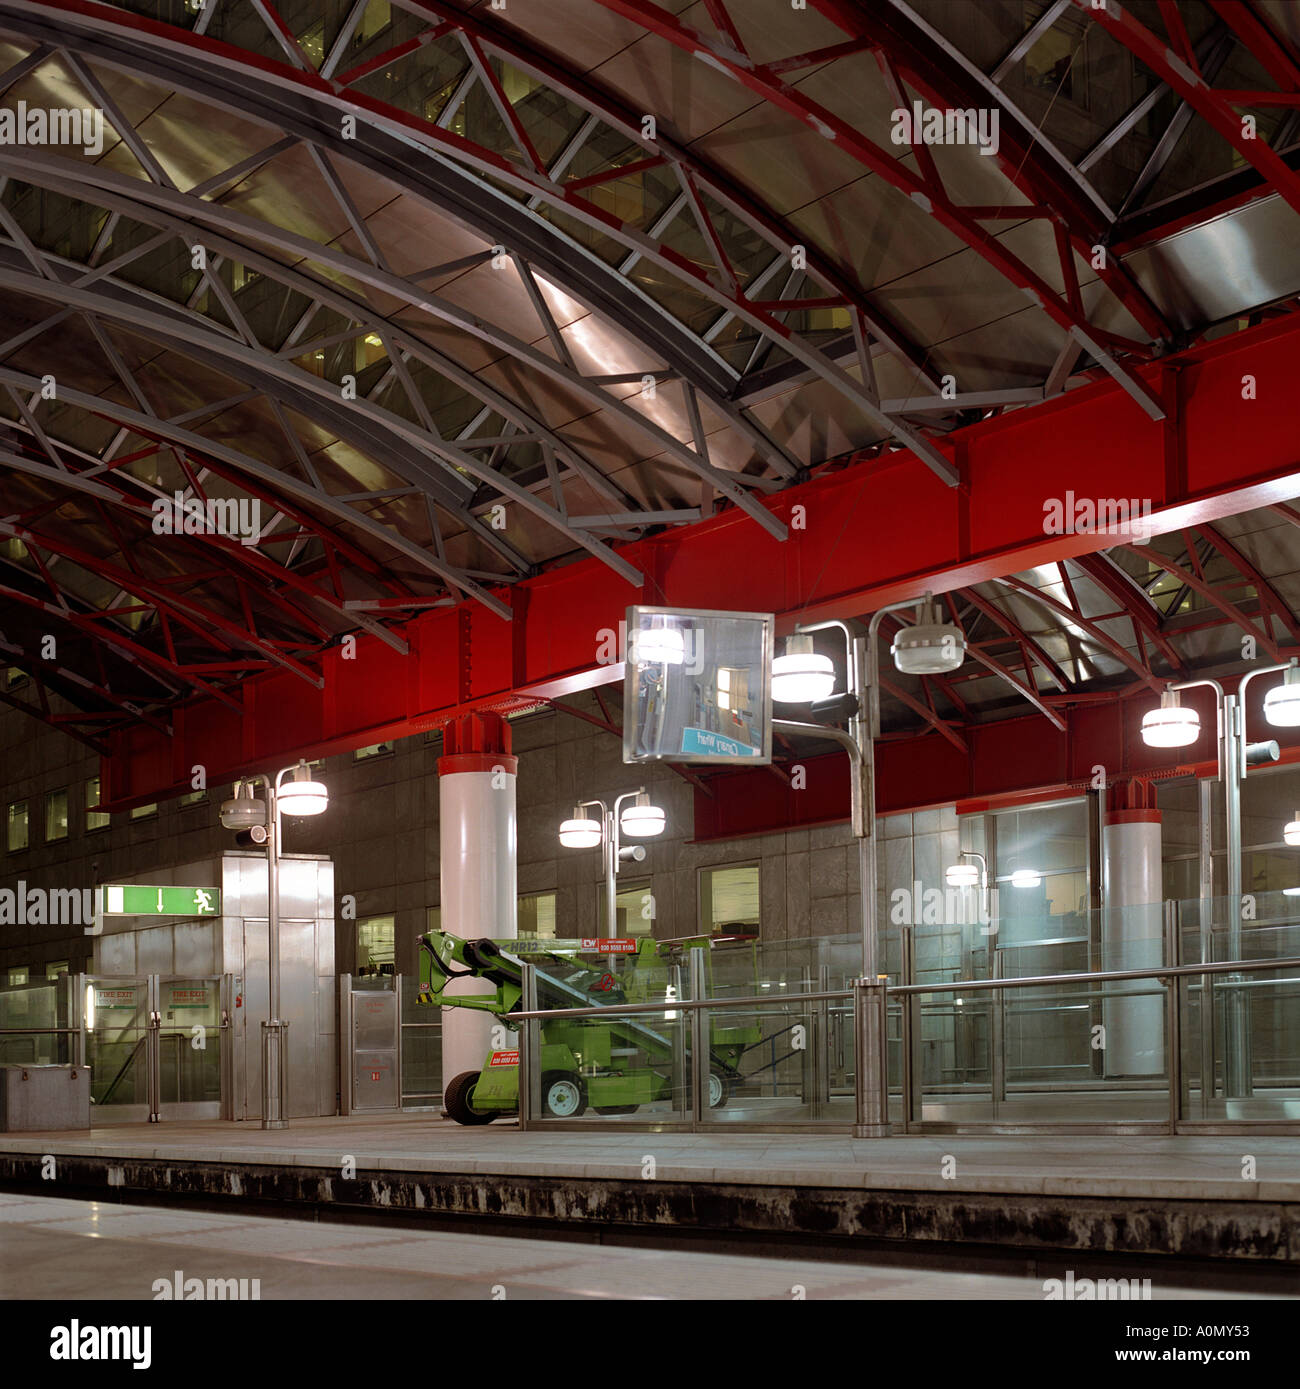 Night shot of platform at DLR platform, Canary Wharf Station,Tower Hamlets, London, UK inc. elliptical glass metal roof Stock Photo